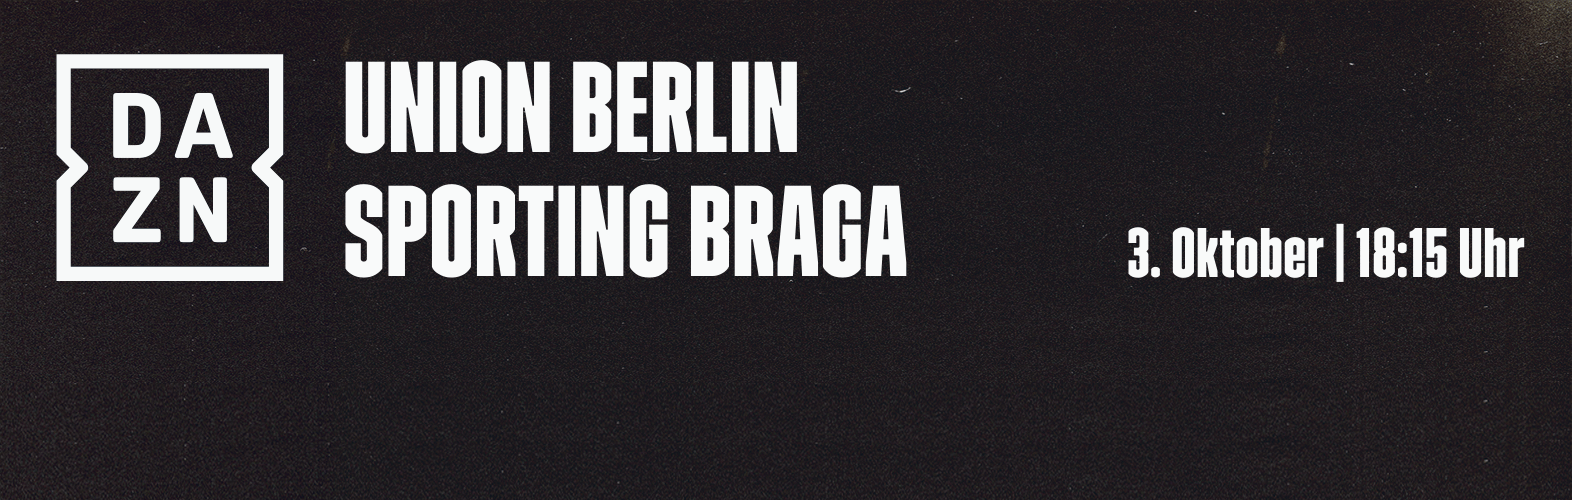 Union Berlin Sporting Braga UEFA Champions League 2. Spieltag Banner